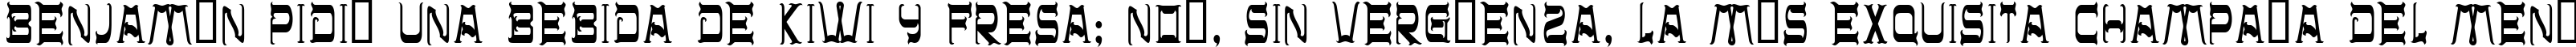 Пример написания шрифтом CHR32 текста на испанском